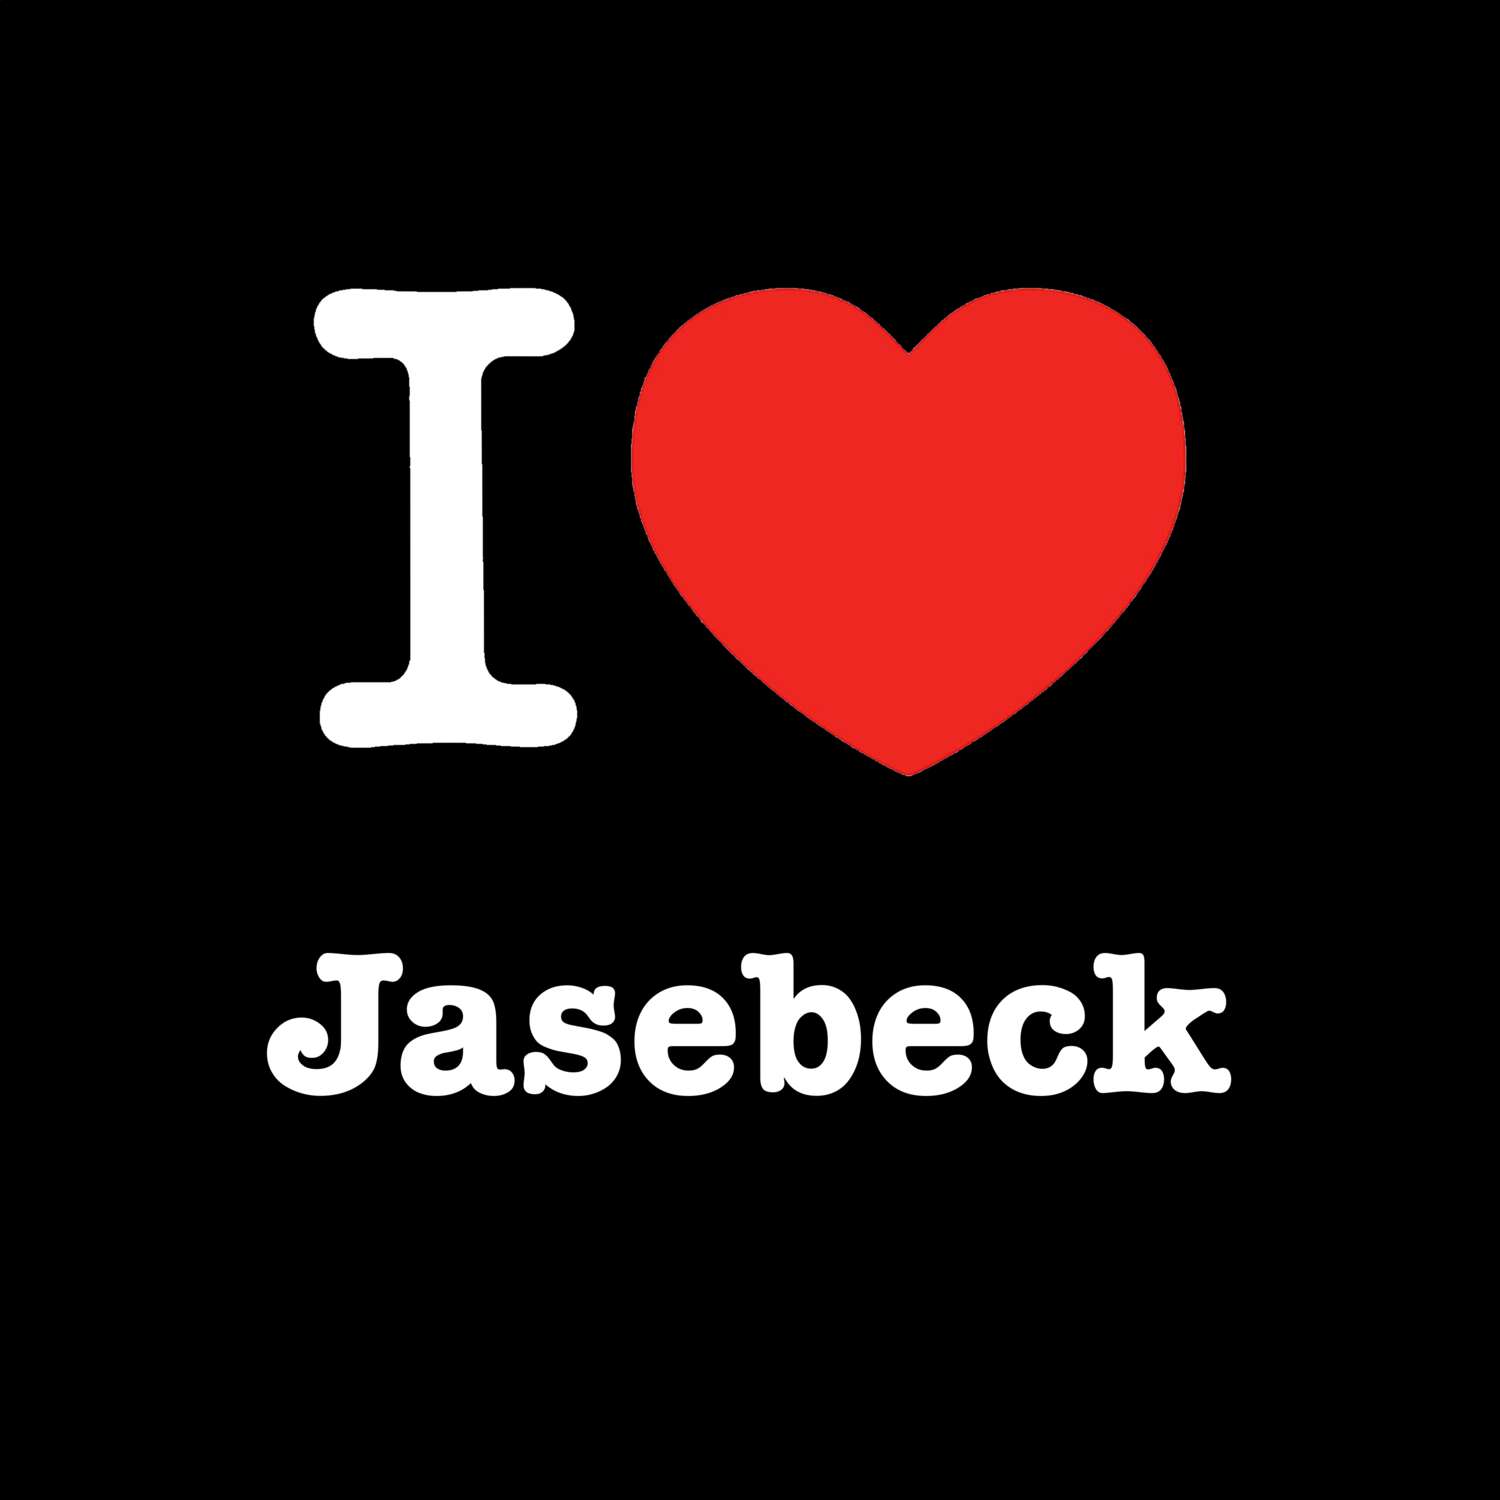 Jasebeck T-Shirt »I love«